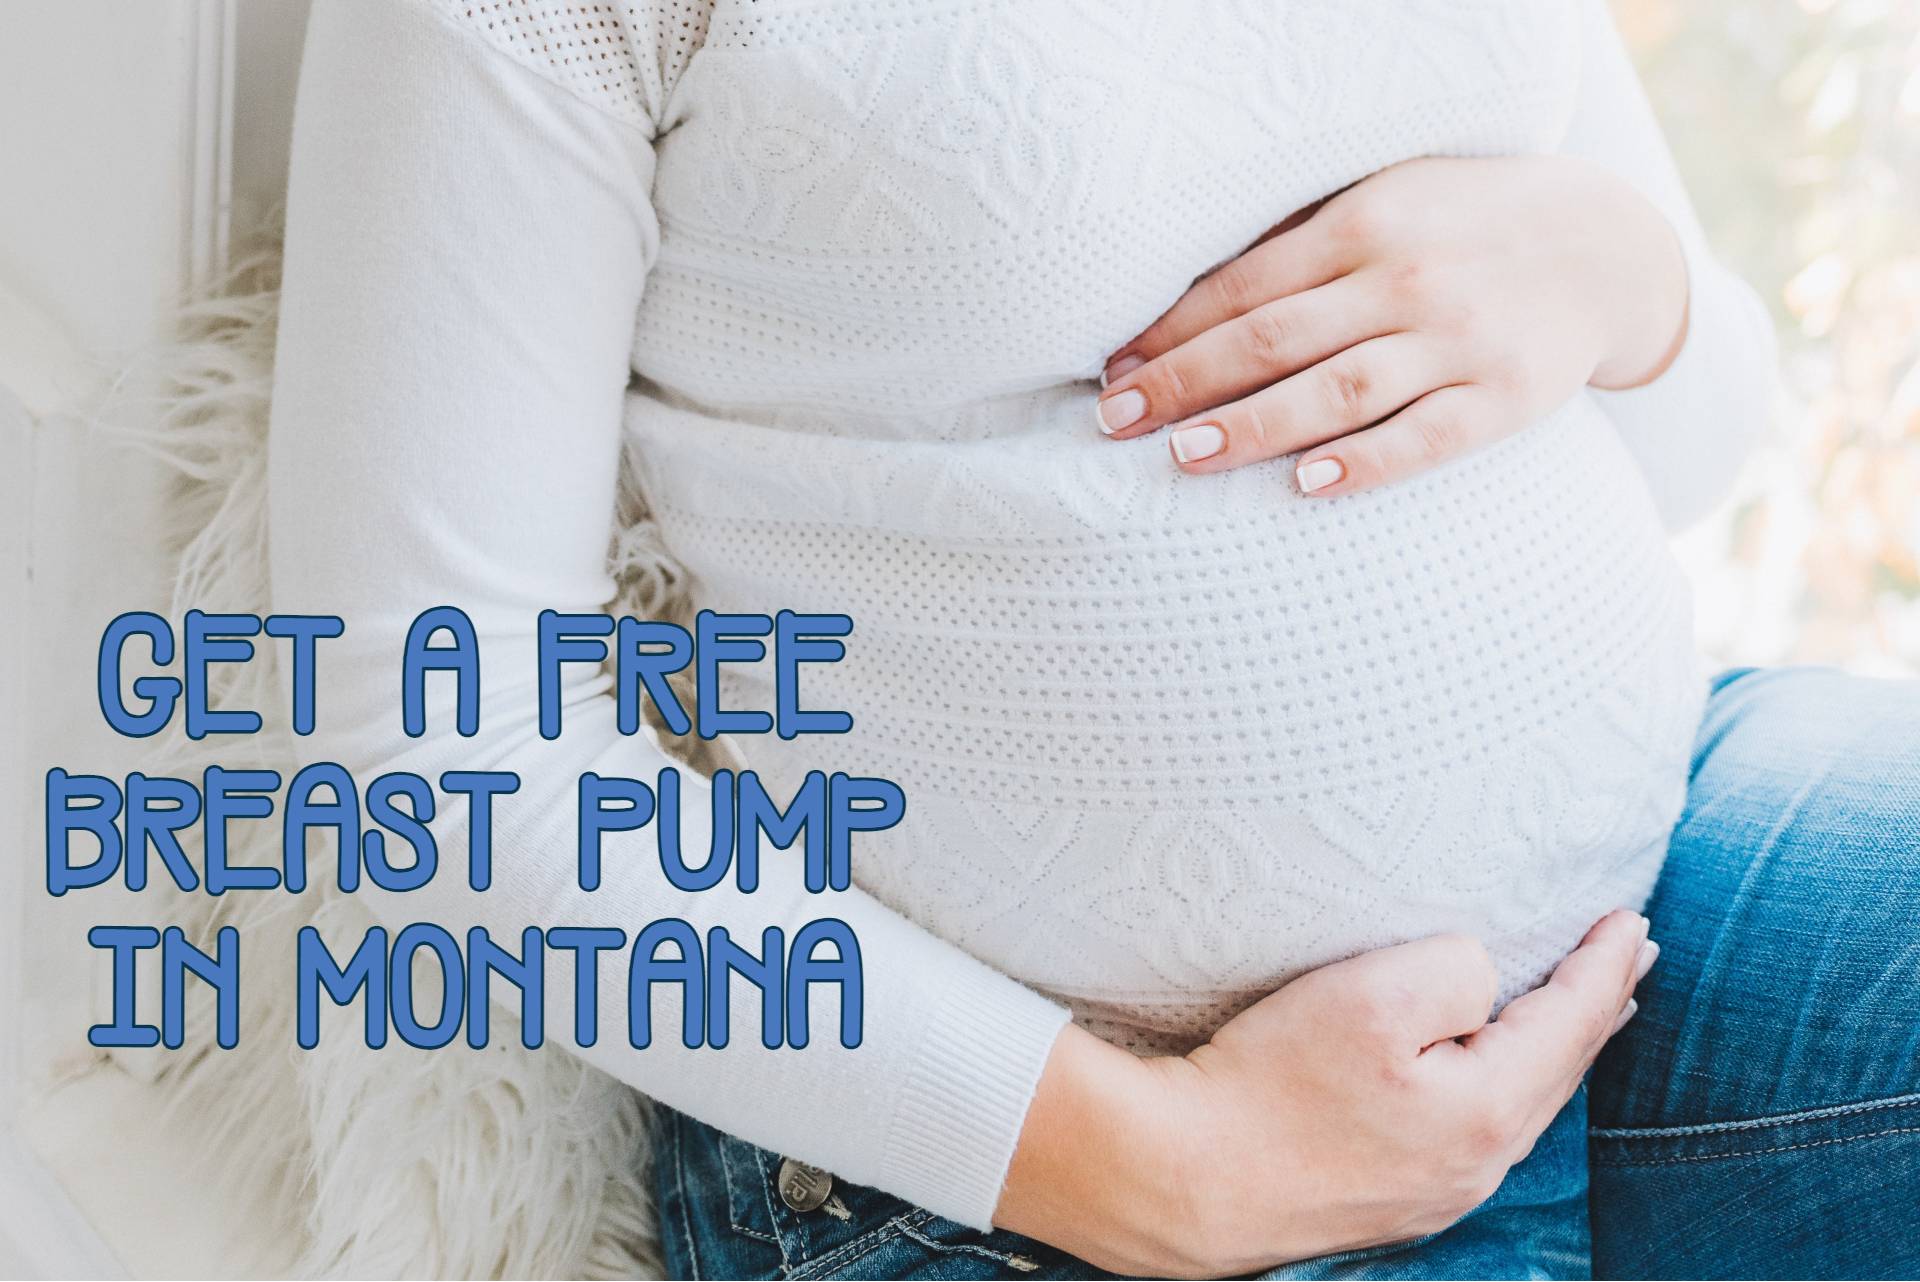 Free Breast Pump in Montana